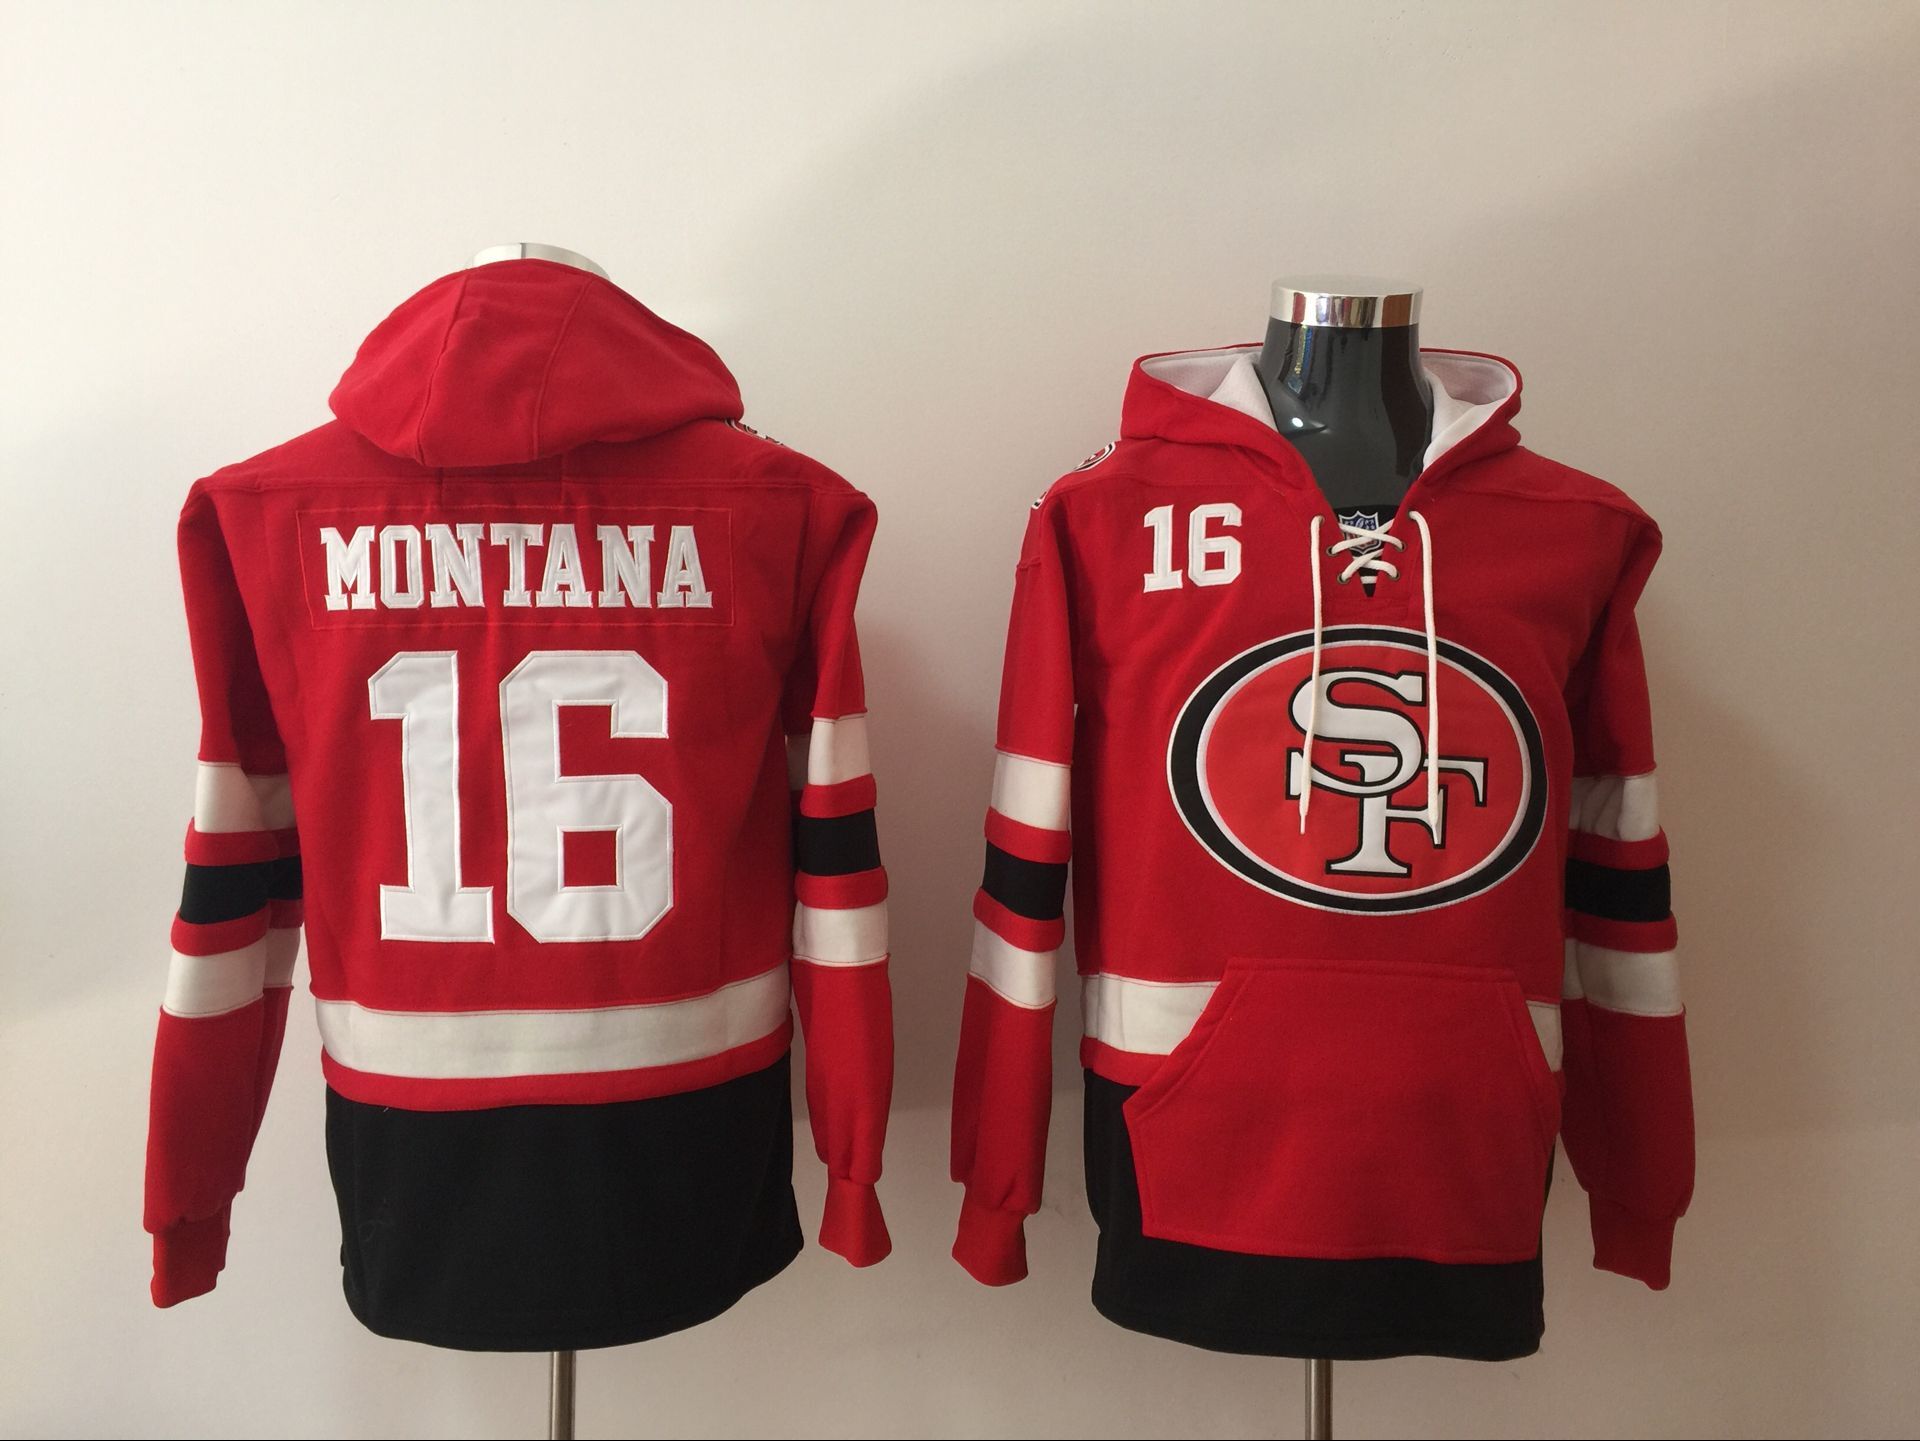 Men's San Francisco 49ers #16 Joe Montana Red All Stitched NFL Hoodie Sweatshirt